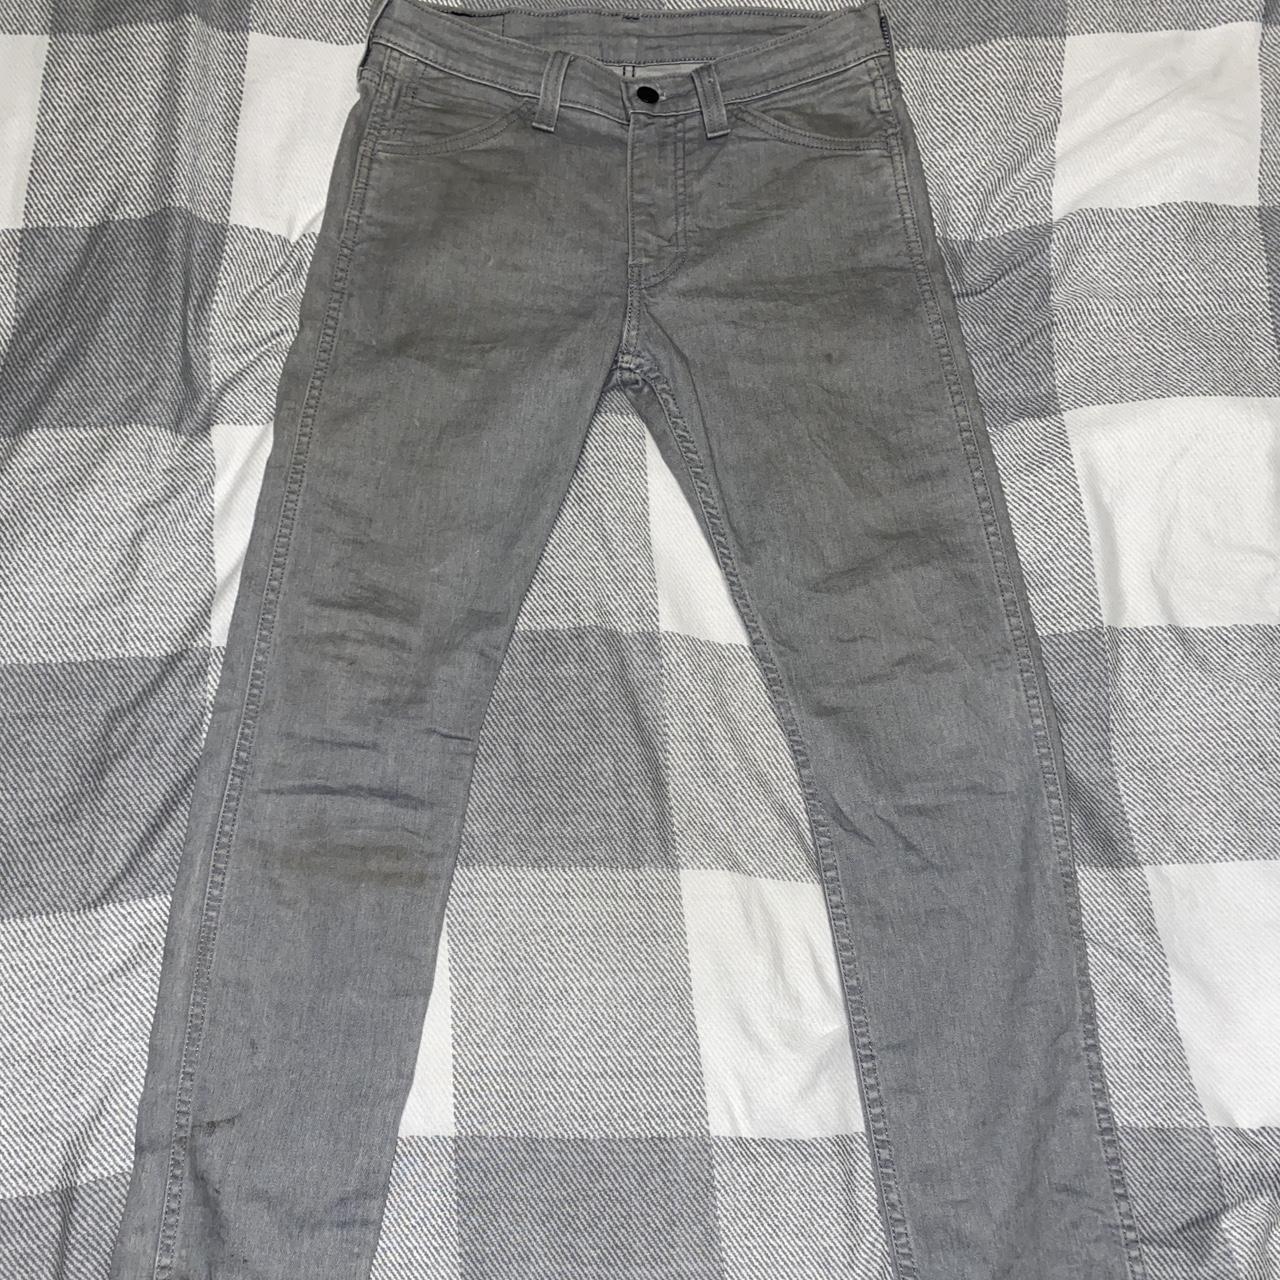 Levi Strauss Grey Skinny Jeans 30W 32L Obvious signs... - Depop